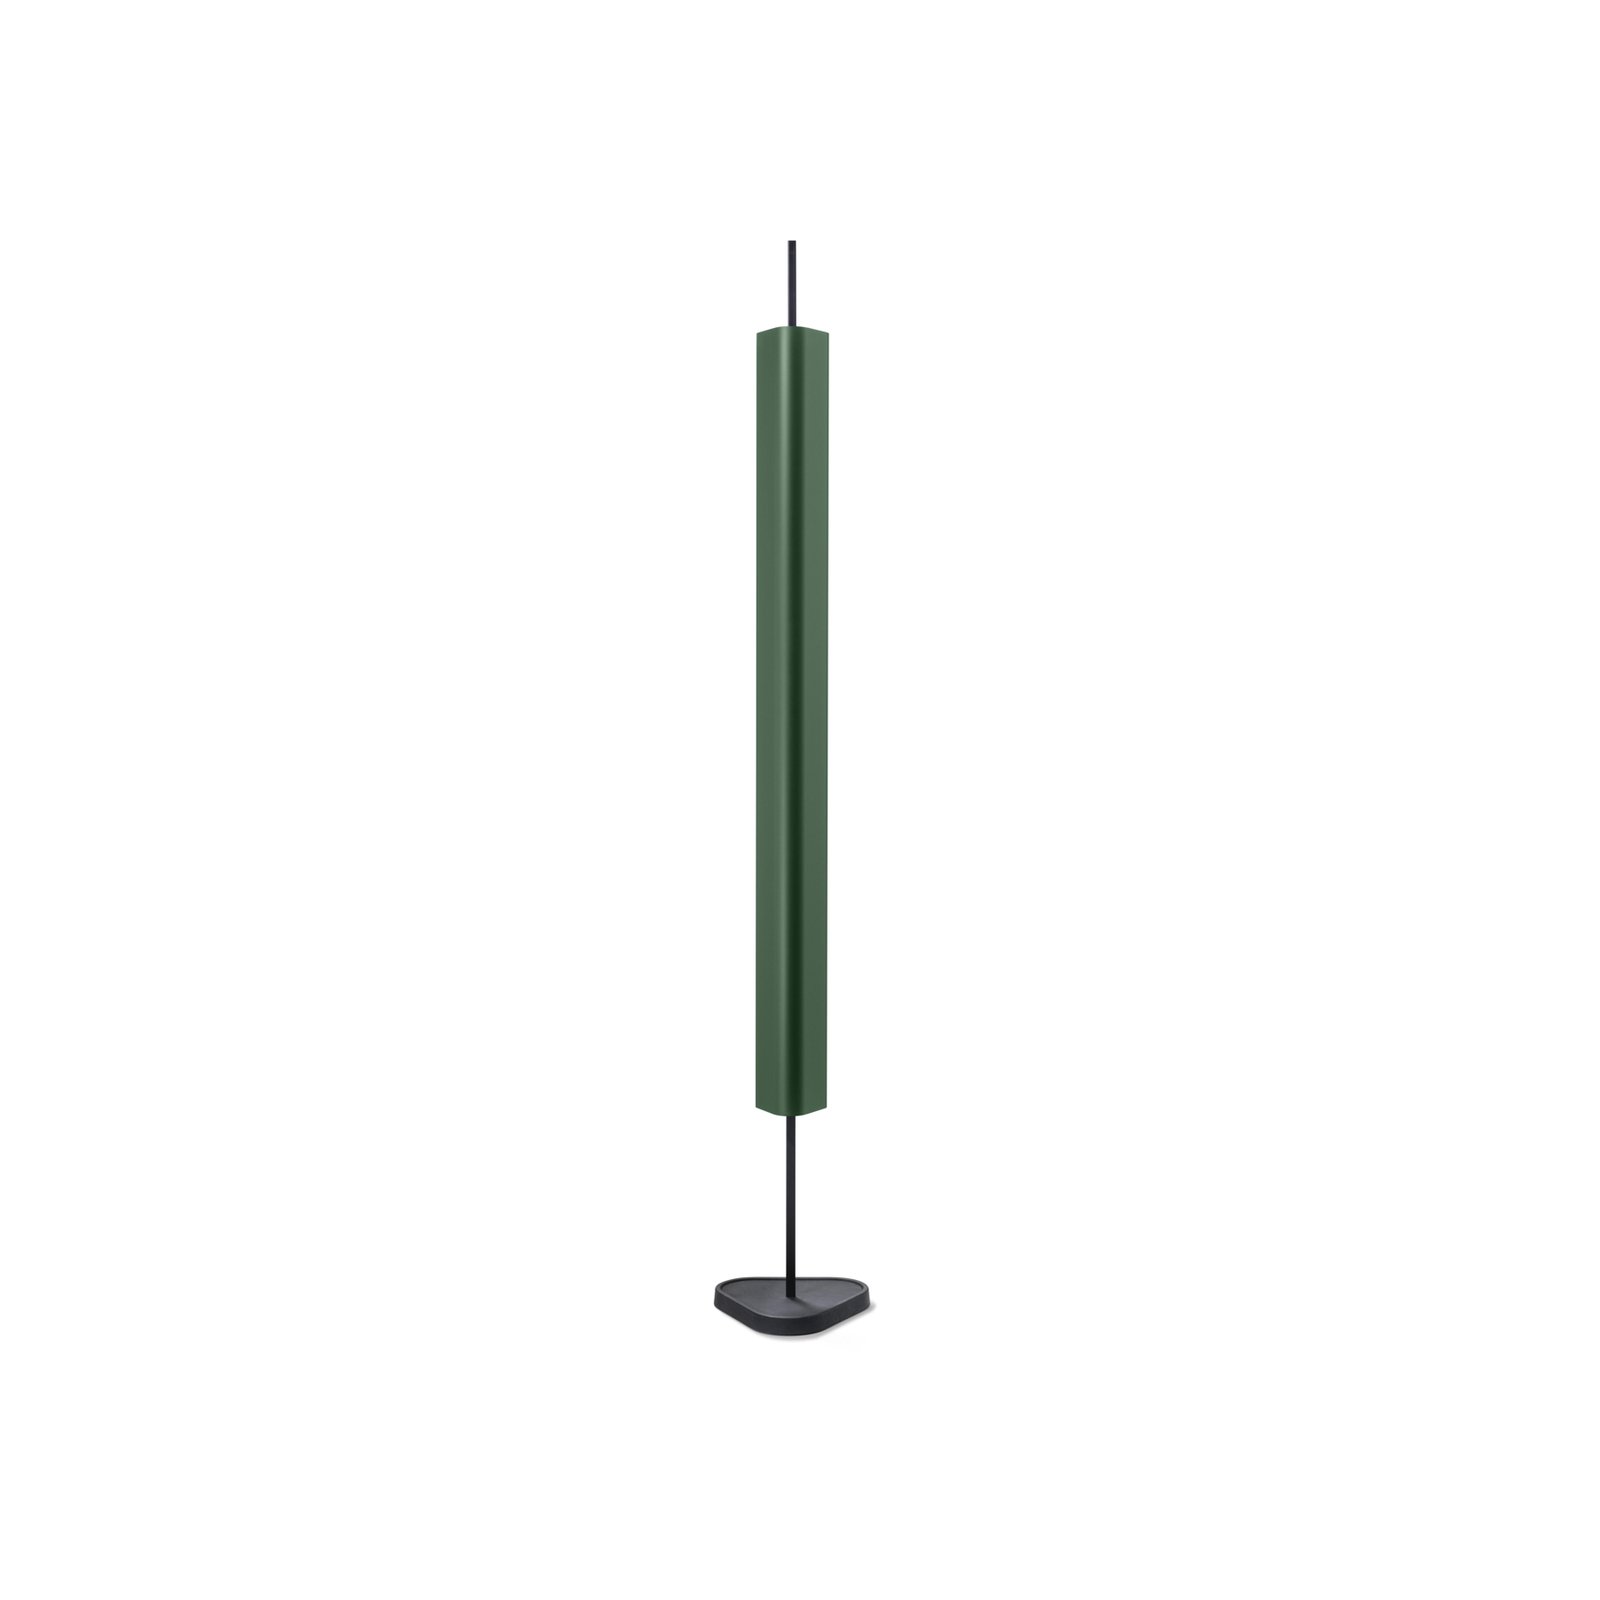 FLOS LED-Stehleuchte Emi, dunkelgrün, dimmbar, Höhe 170 cm